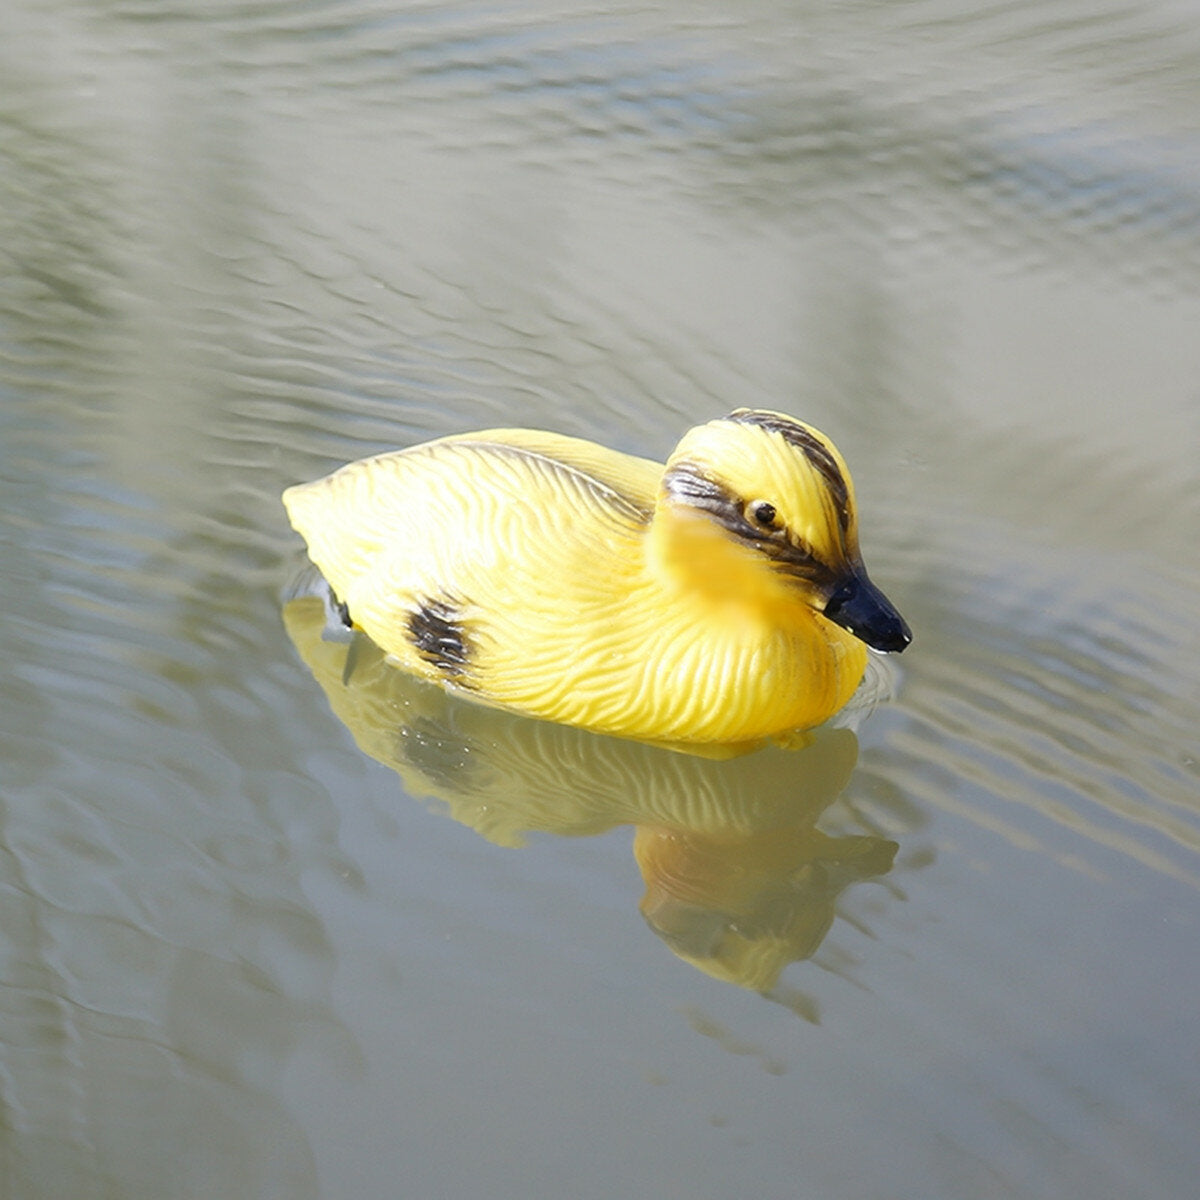 1 Pair Ducks Floating Hunting Shooting Decoy Deterrent Repeller Pool Pond Decor